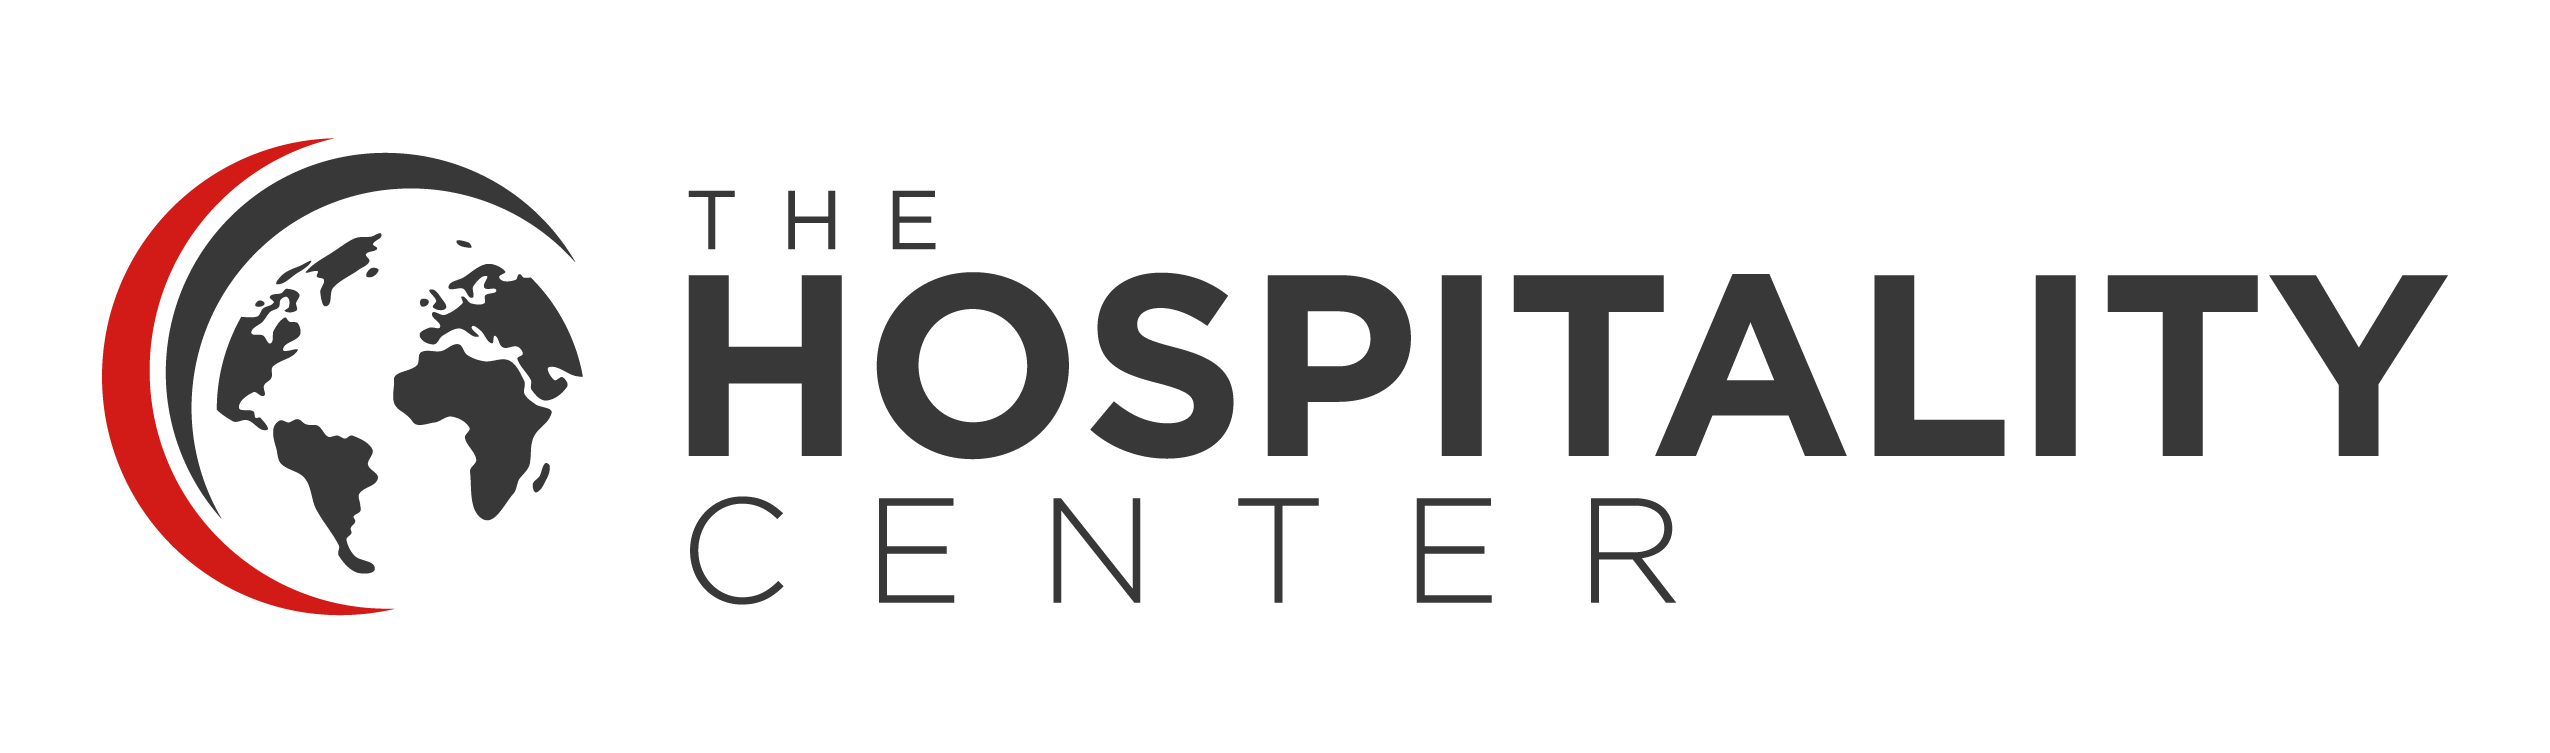 The Hospitality Center logo